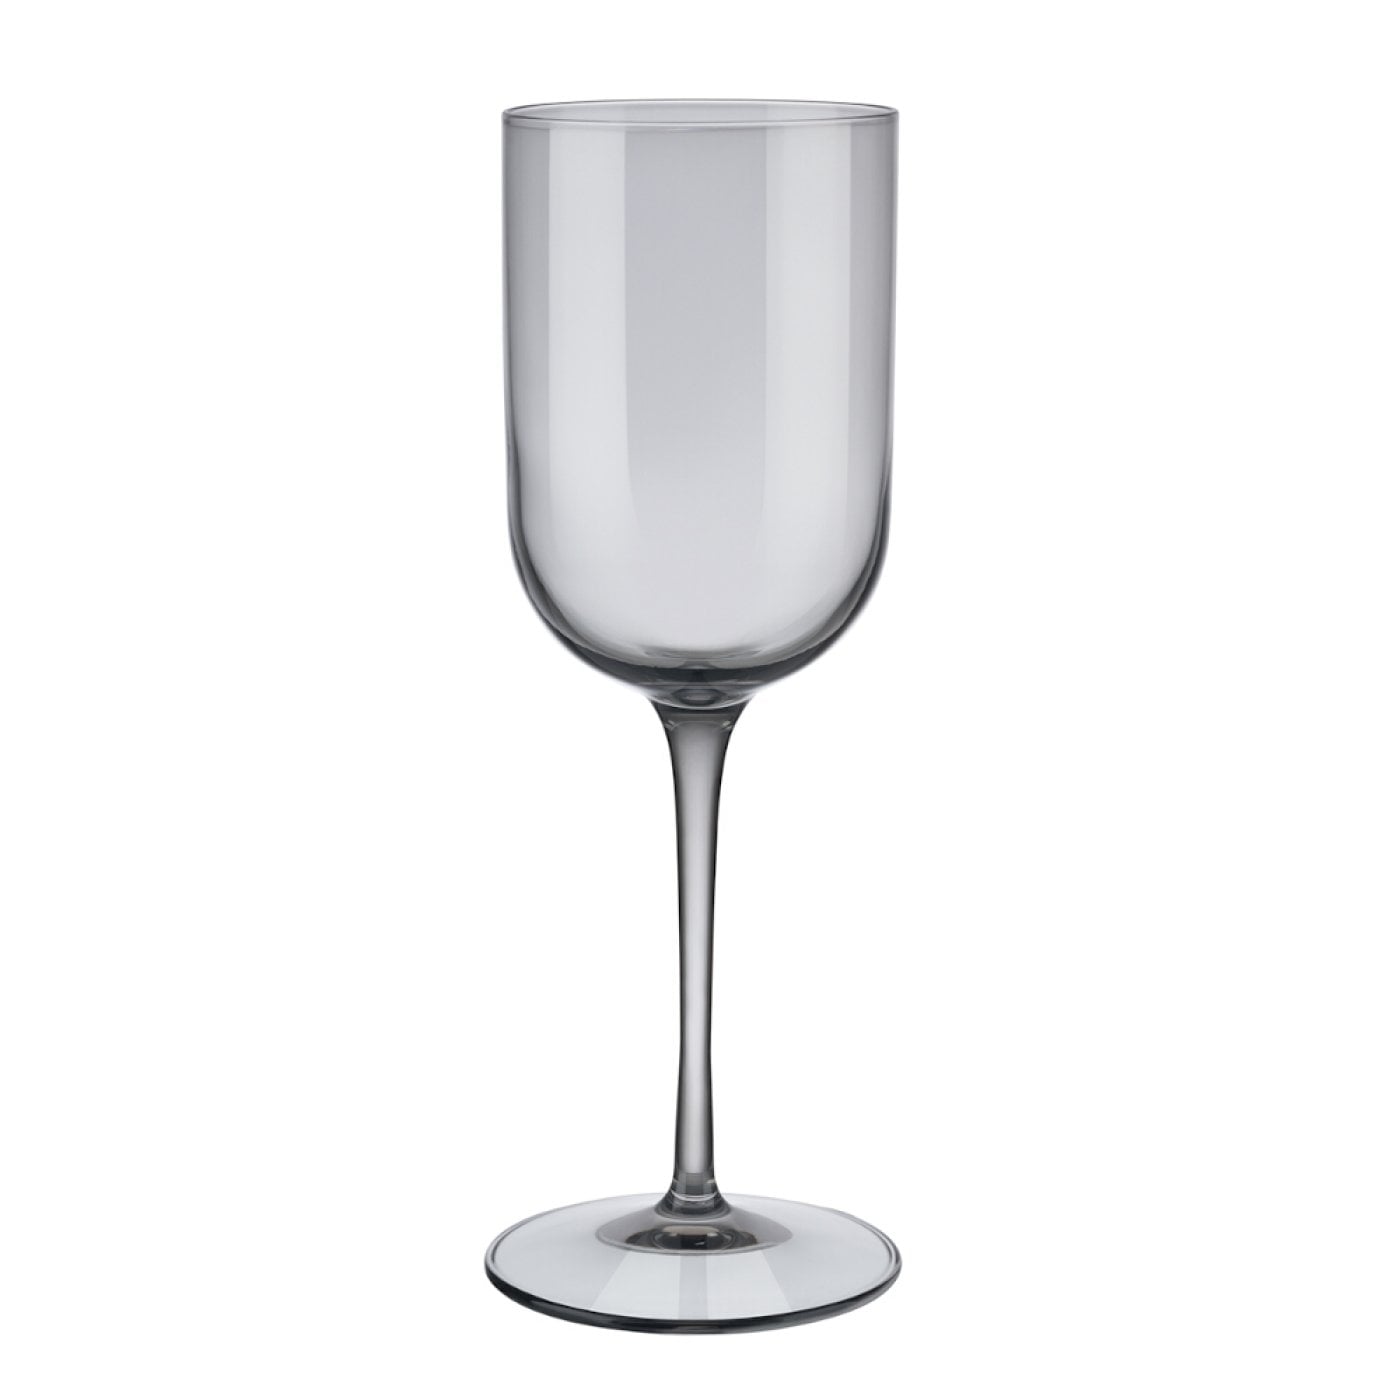 Blomus White Wine Glasses Tinted in Smoky-Grey Fuum Set of 4